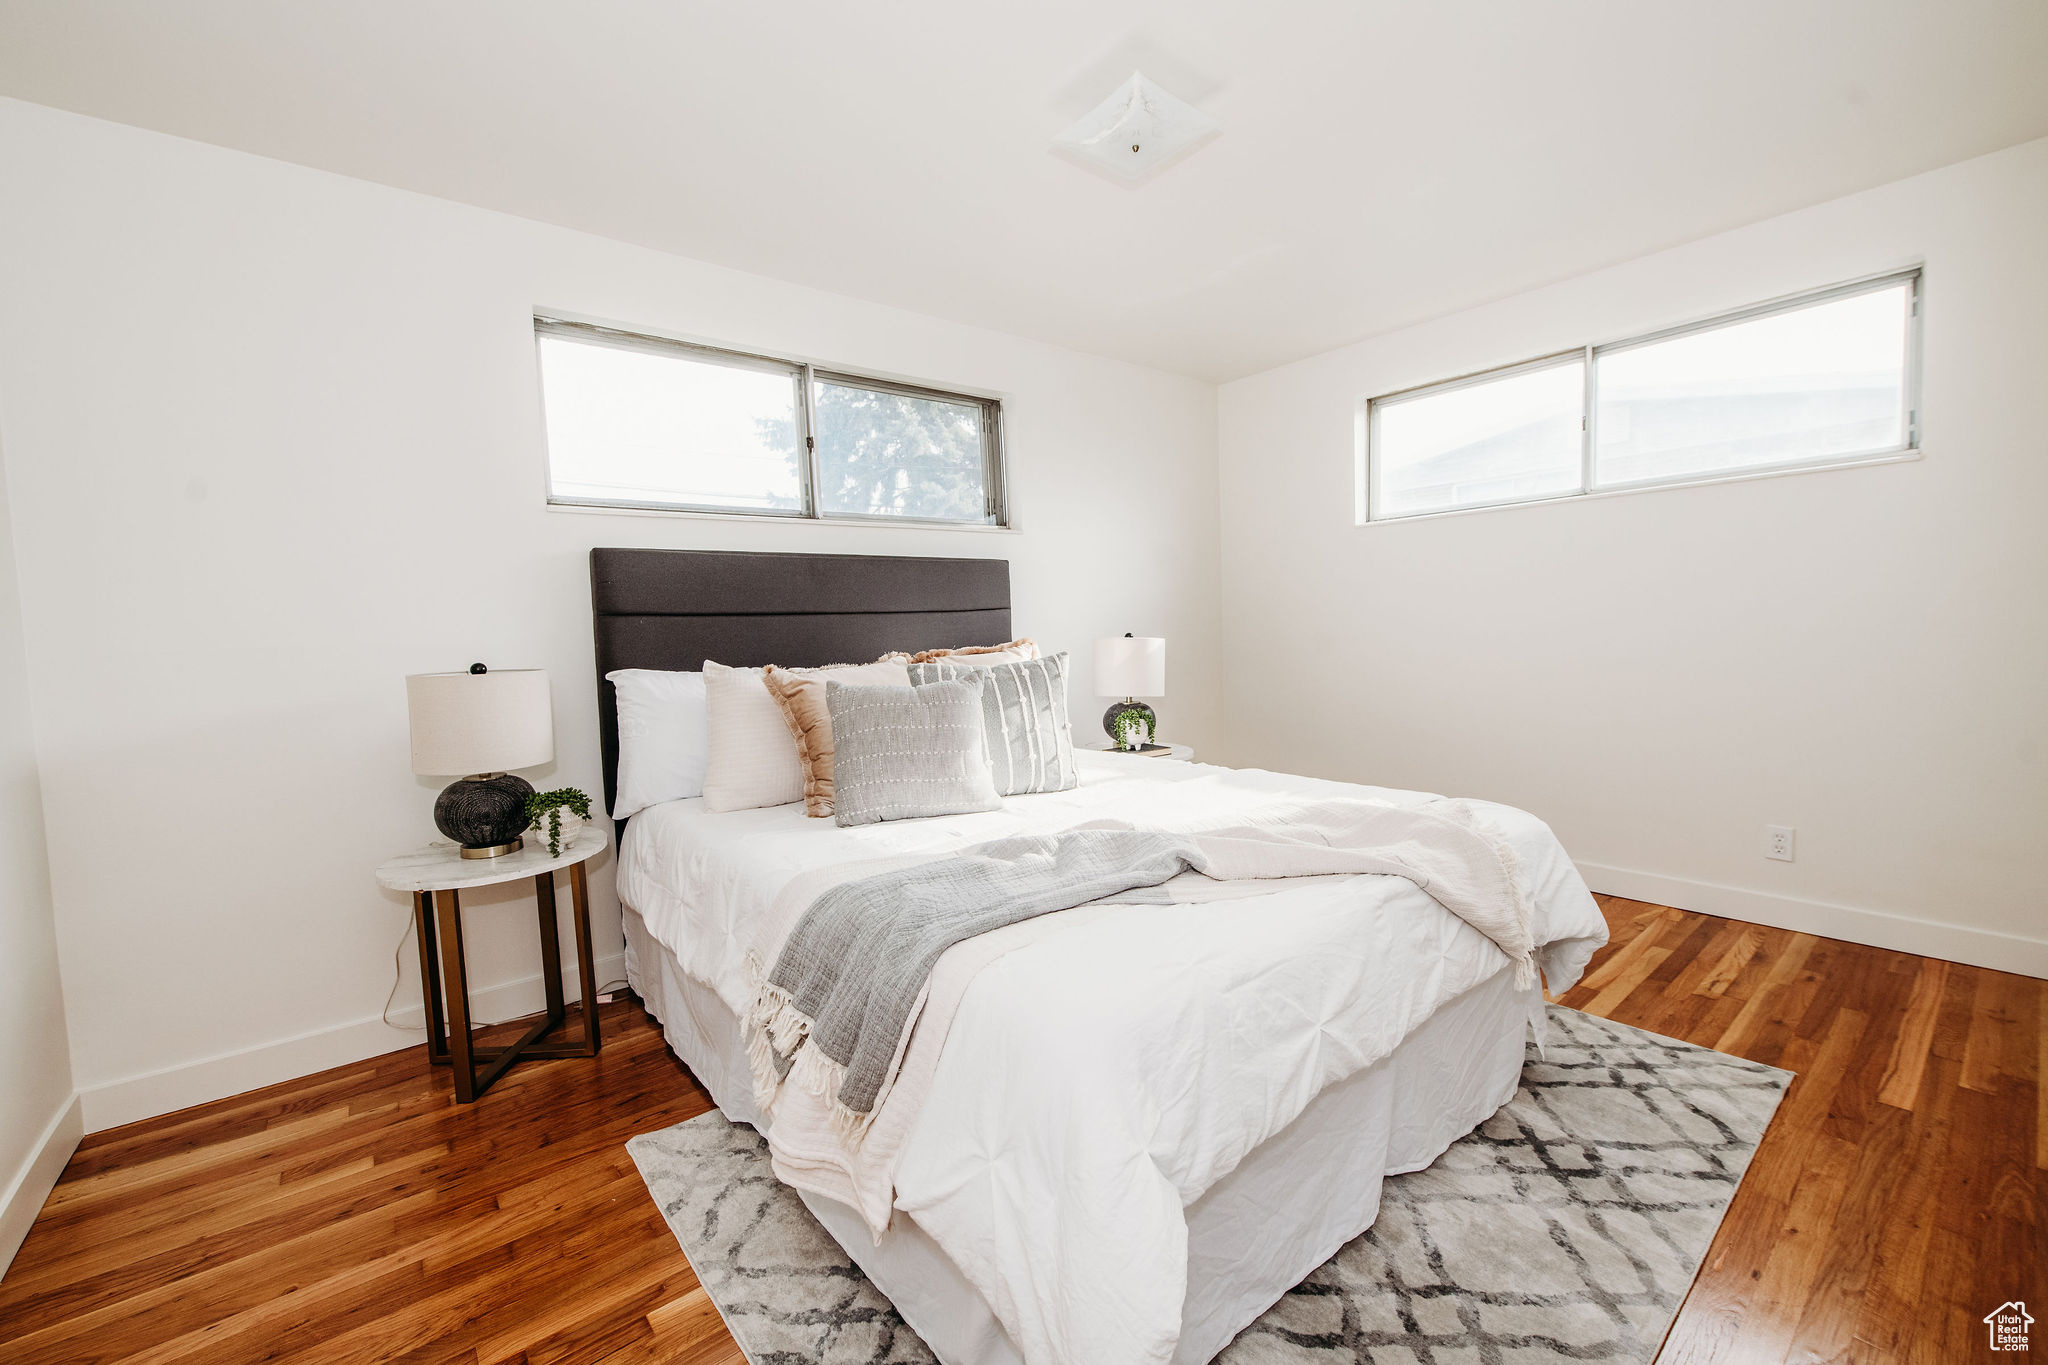 Bedroom with multiple windows and hardwood / wood-style flooring